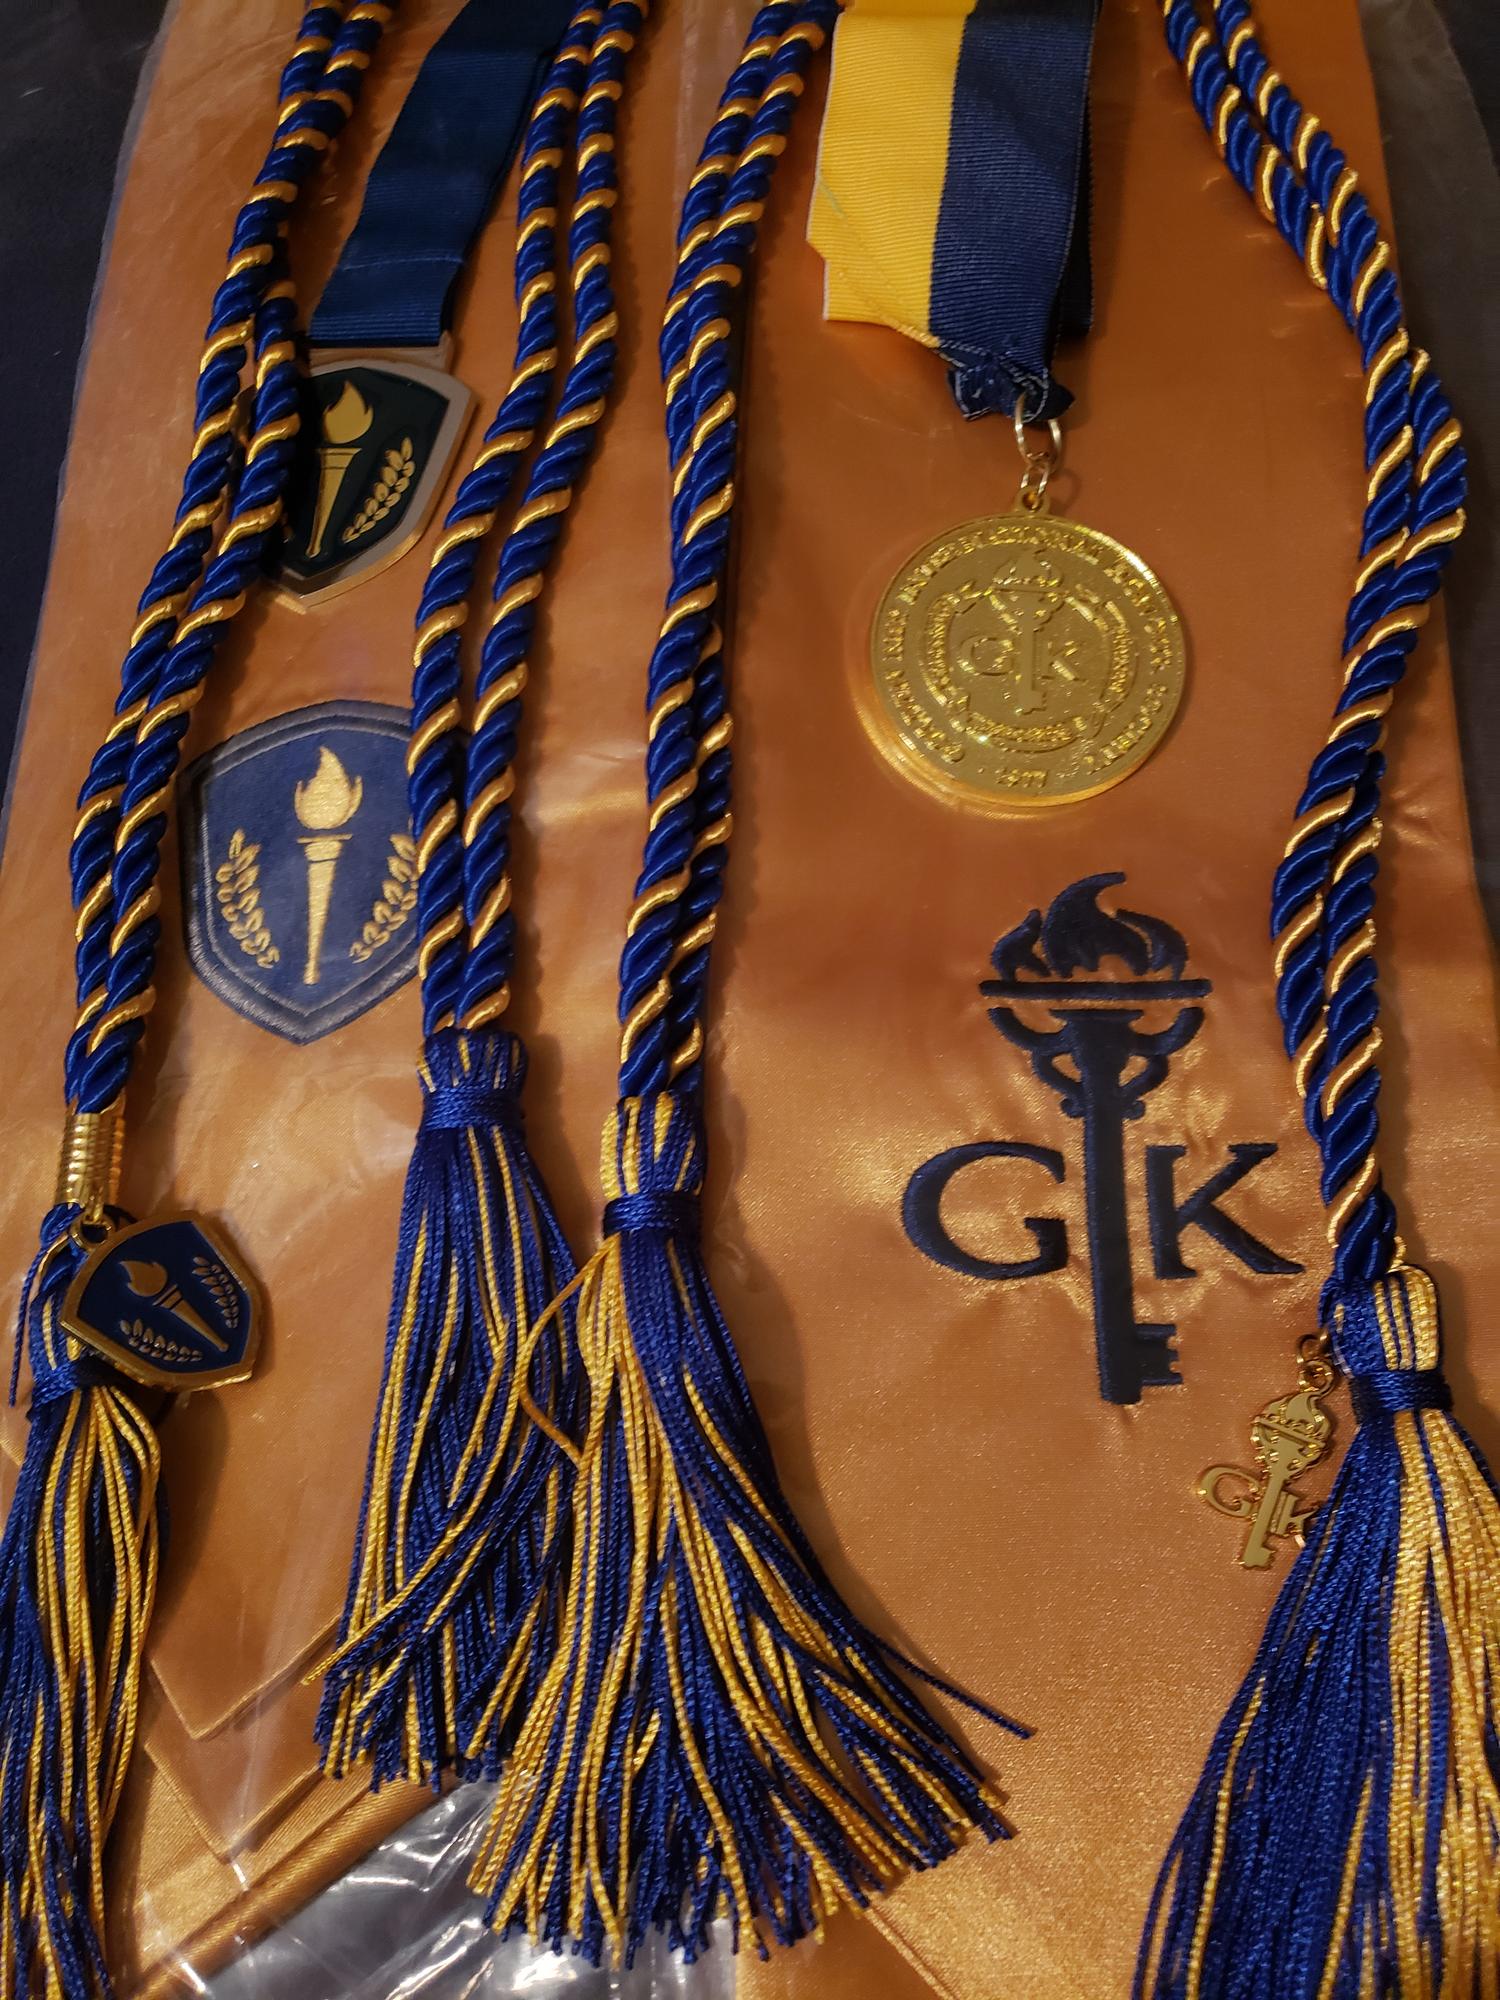 Gold Graduate Tassels from Honors Graduation